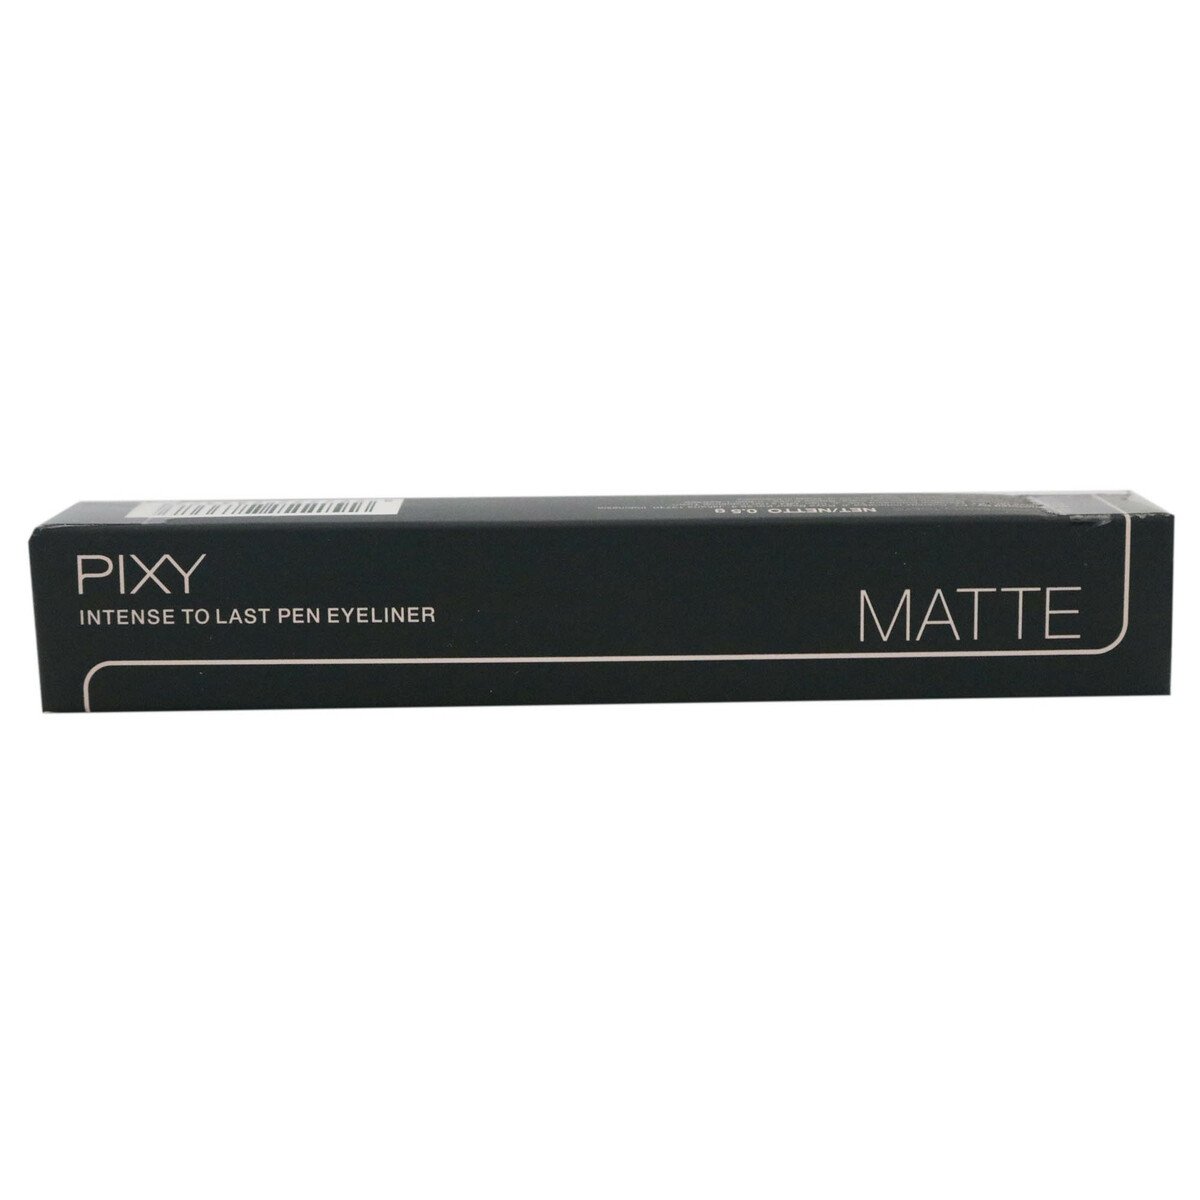 Pixy Intense To Last Pen Eyeliner 01 Natural 35g